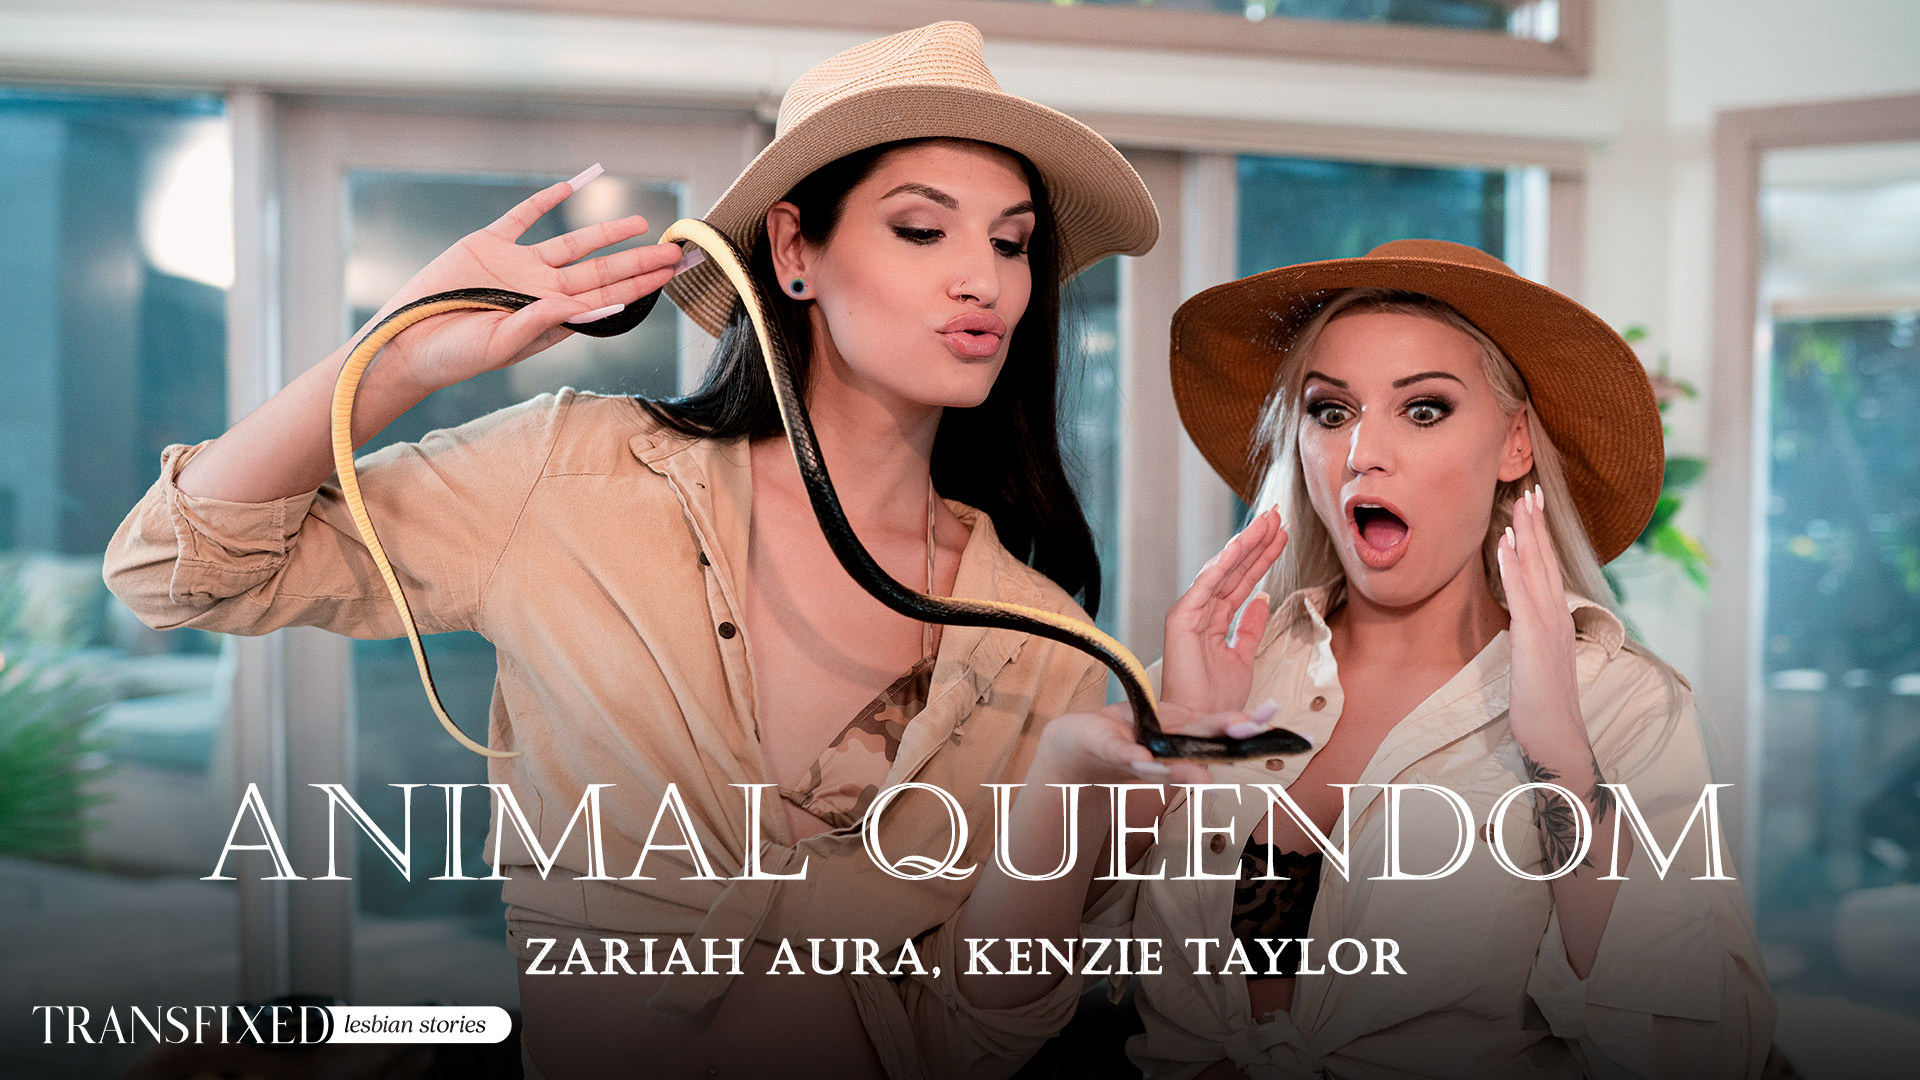 Kenzie Taylor, Zariah Aura “Animal Queendom” Transfixed